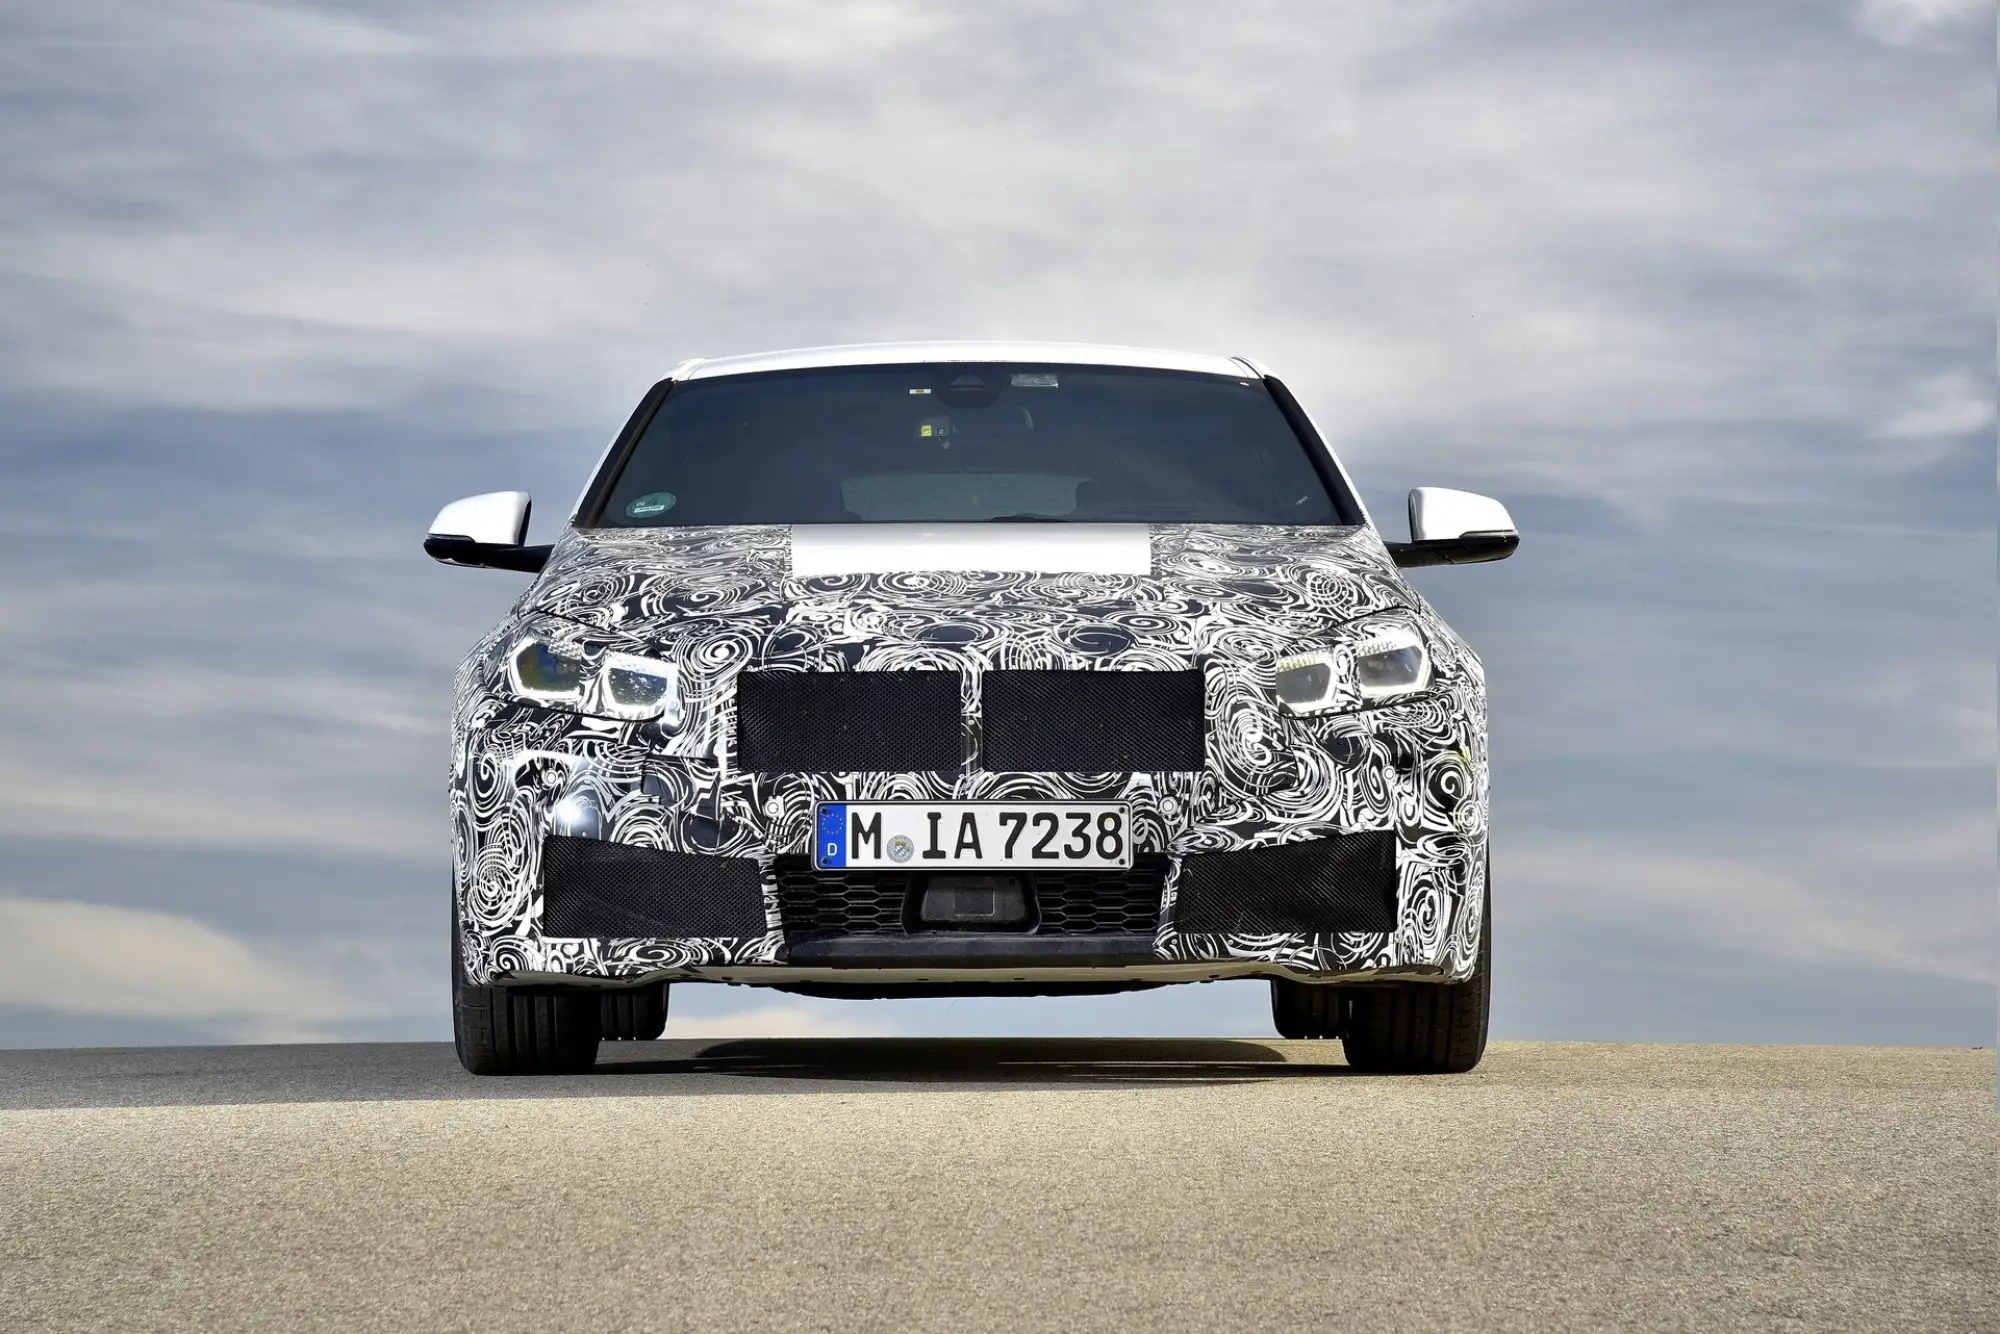 BMW Serie 1 MY 2020 - Prototipo - 5